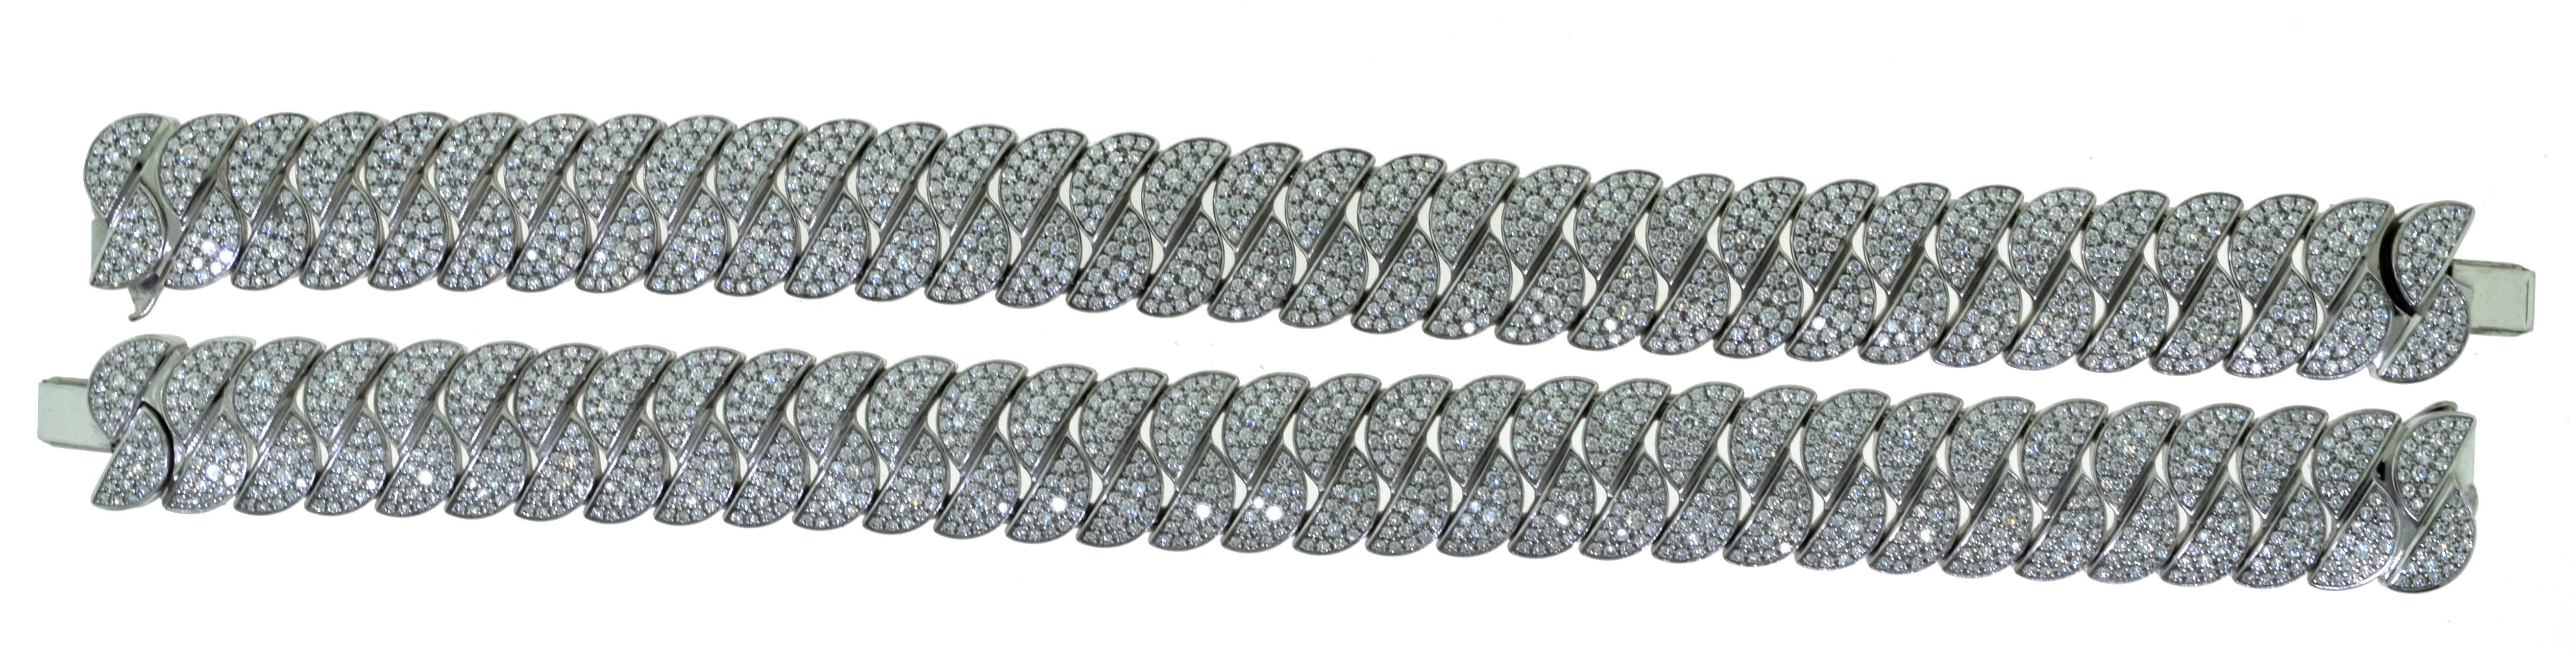 Cartier La Dona Diamond Bracelet For Sale 1